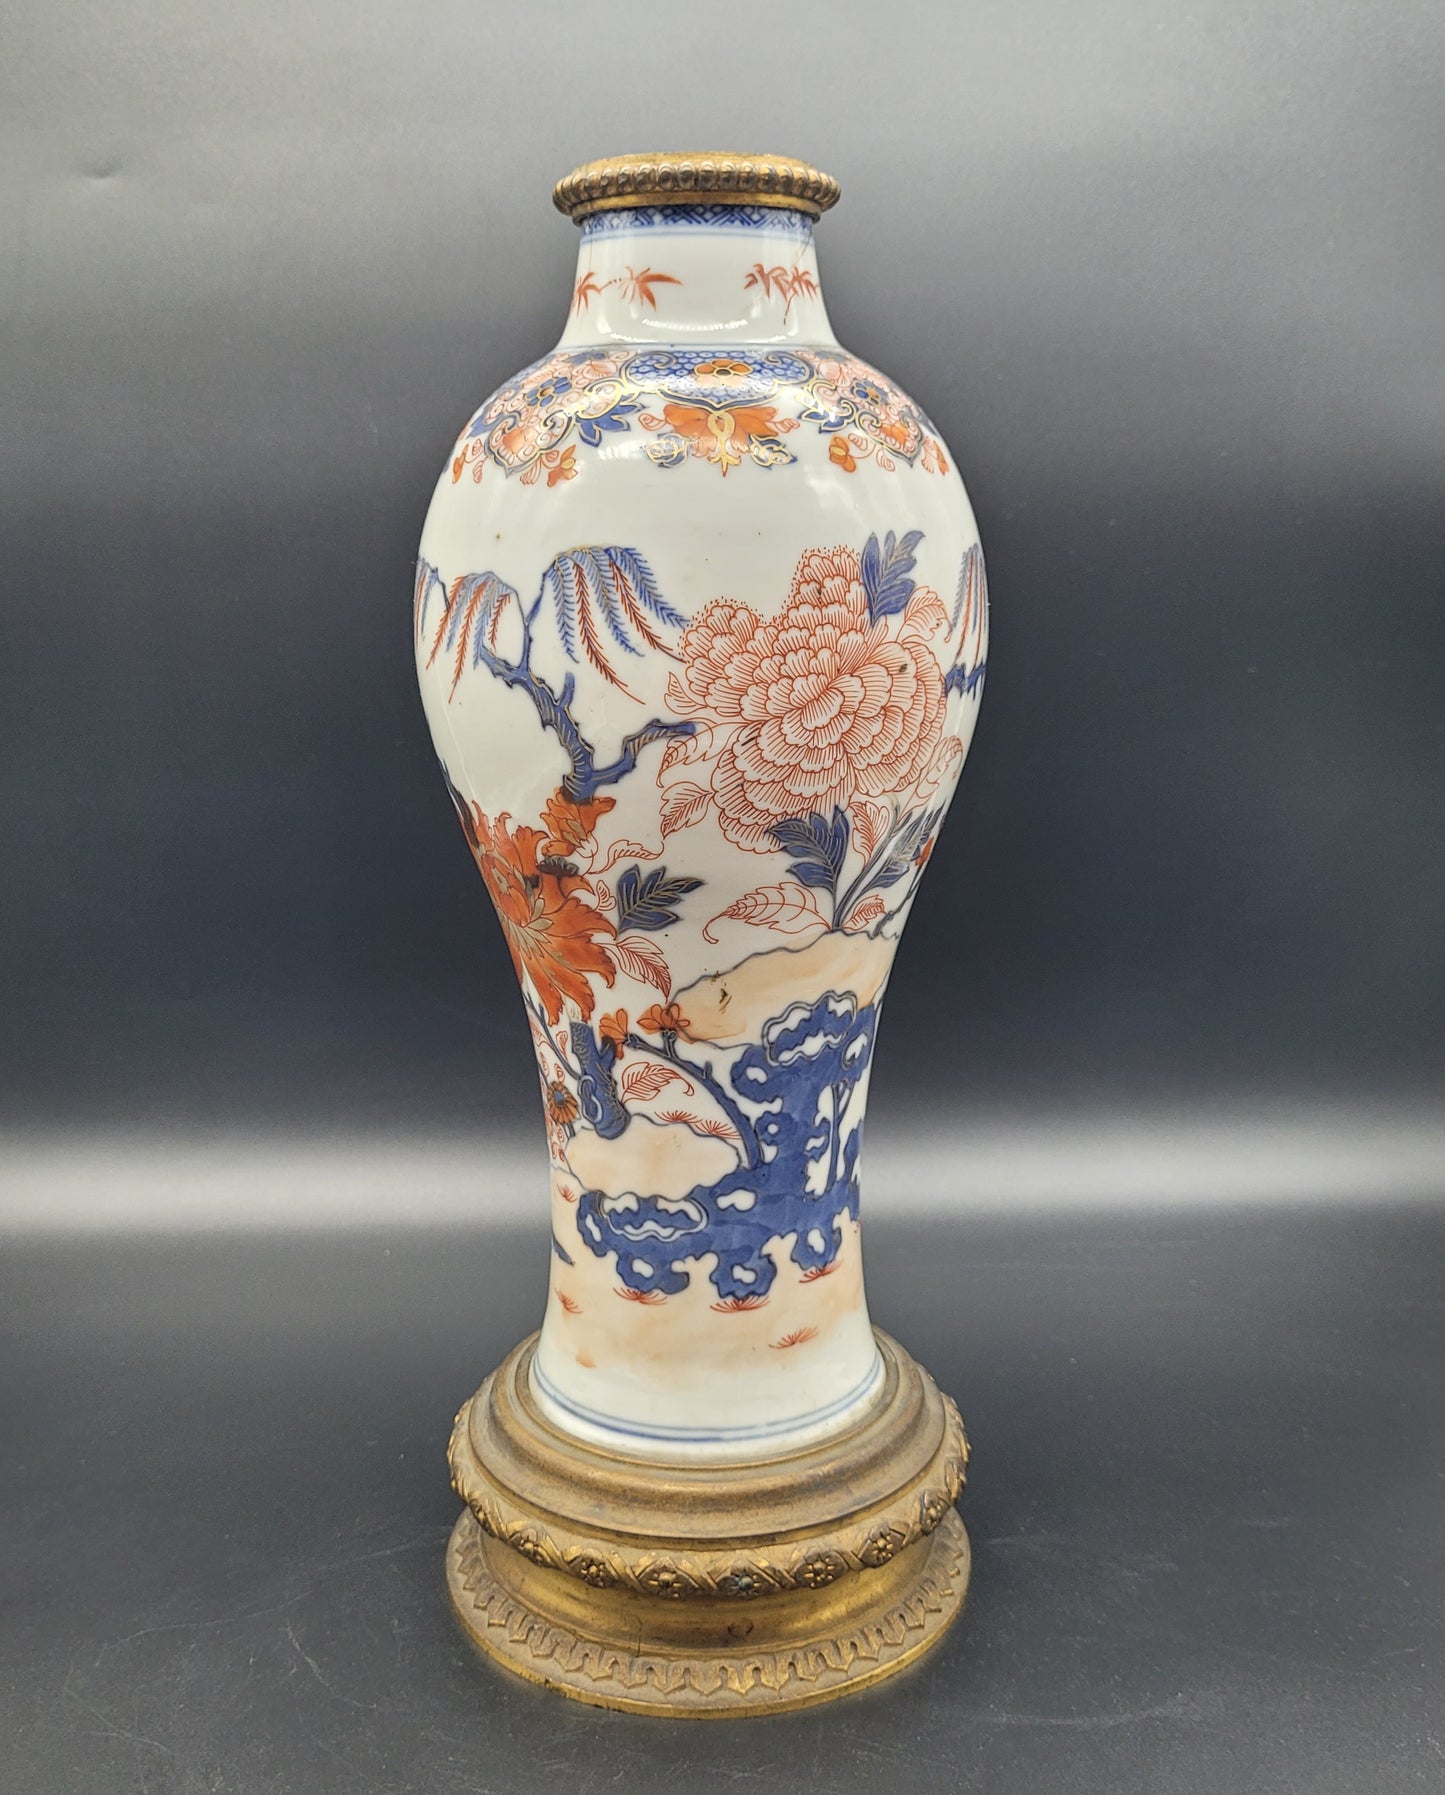 Antique Kangxi Period Chinese Imari Porcelain Vase, With 19th Century Gilt Bronze Mount